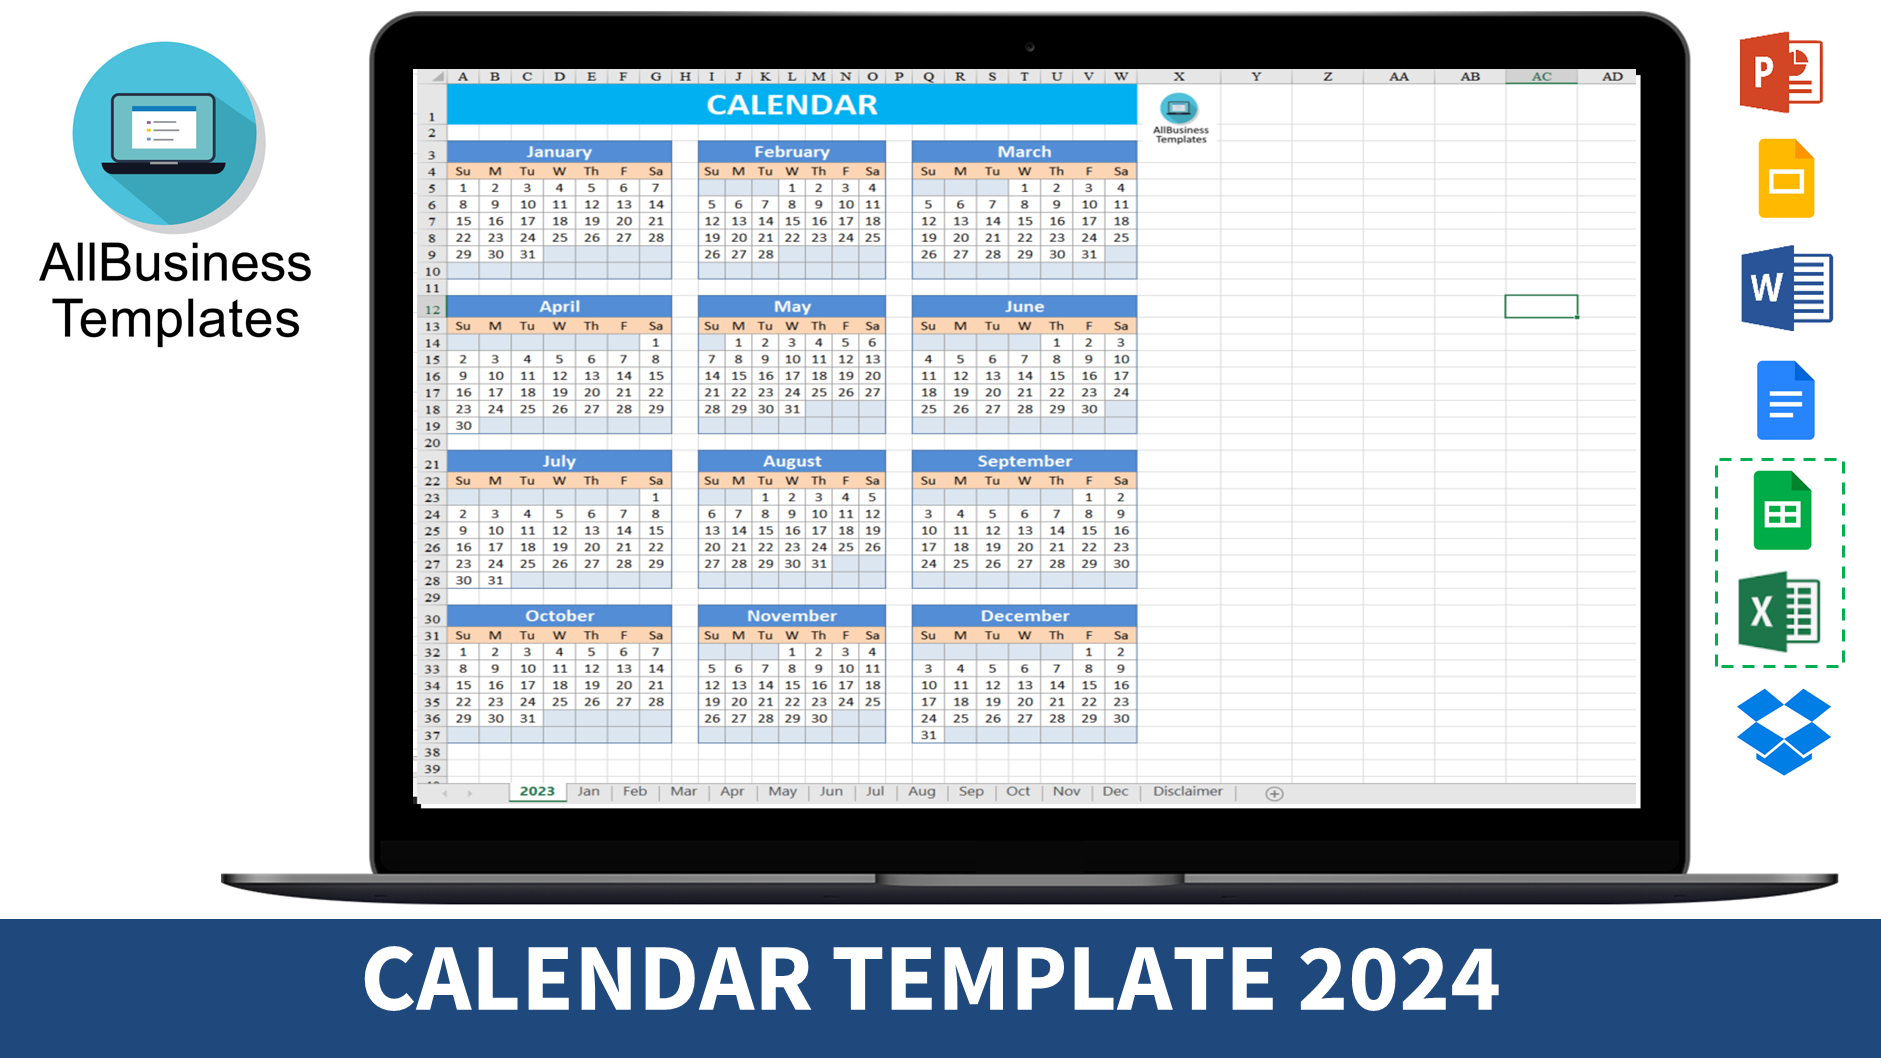 Calendar Template 2024 main image